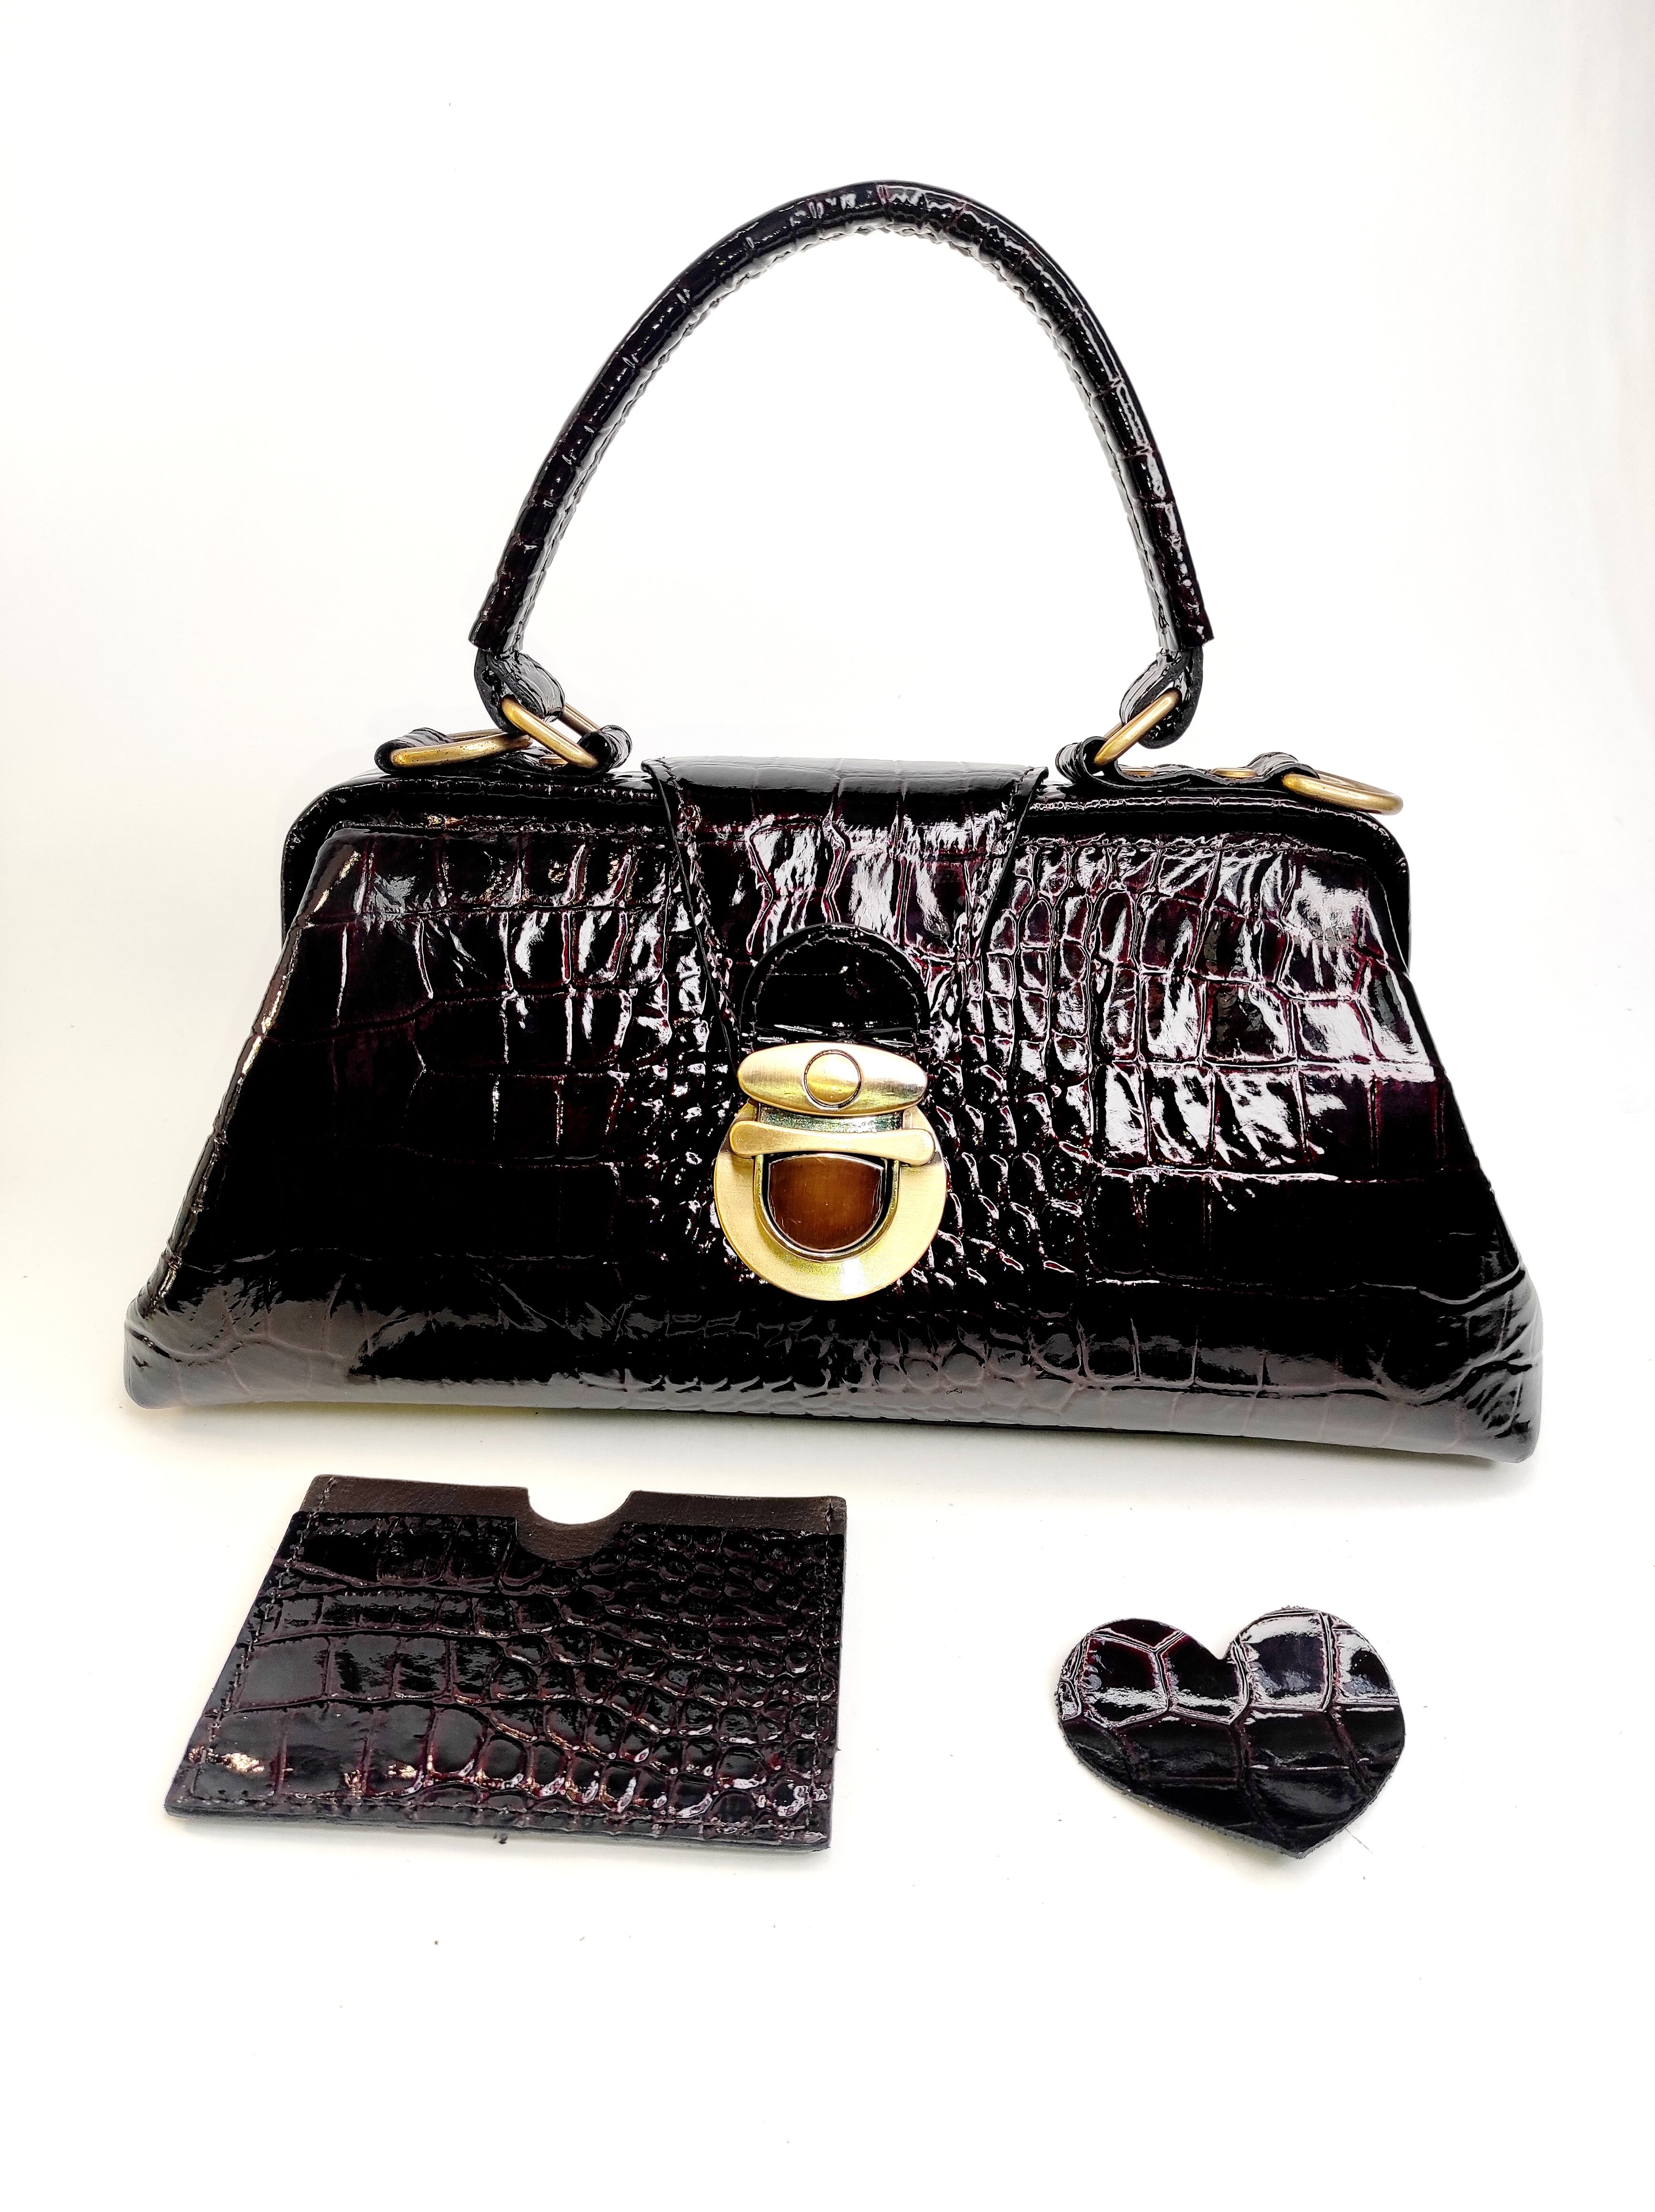 L.Terenty / Саквояж Baguette 23, натуральная кожа, винтаж, женская сумка, сумка на ремне, ручная работа - фотография № 6